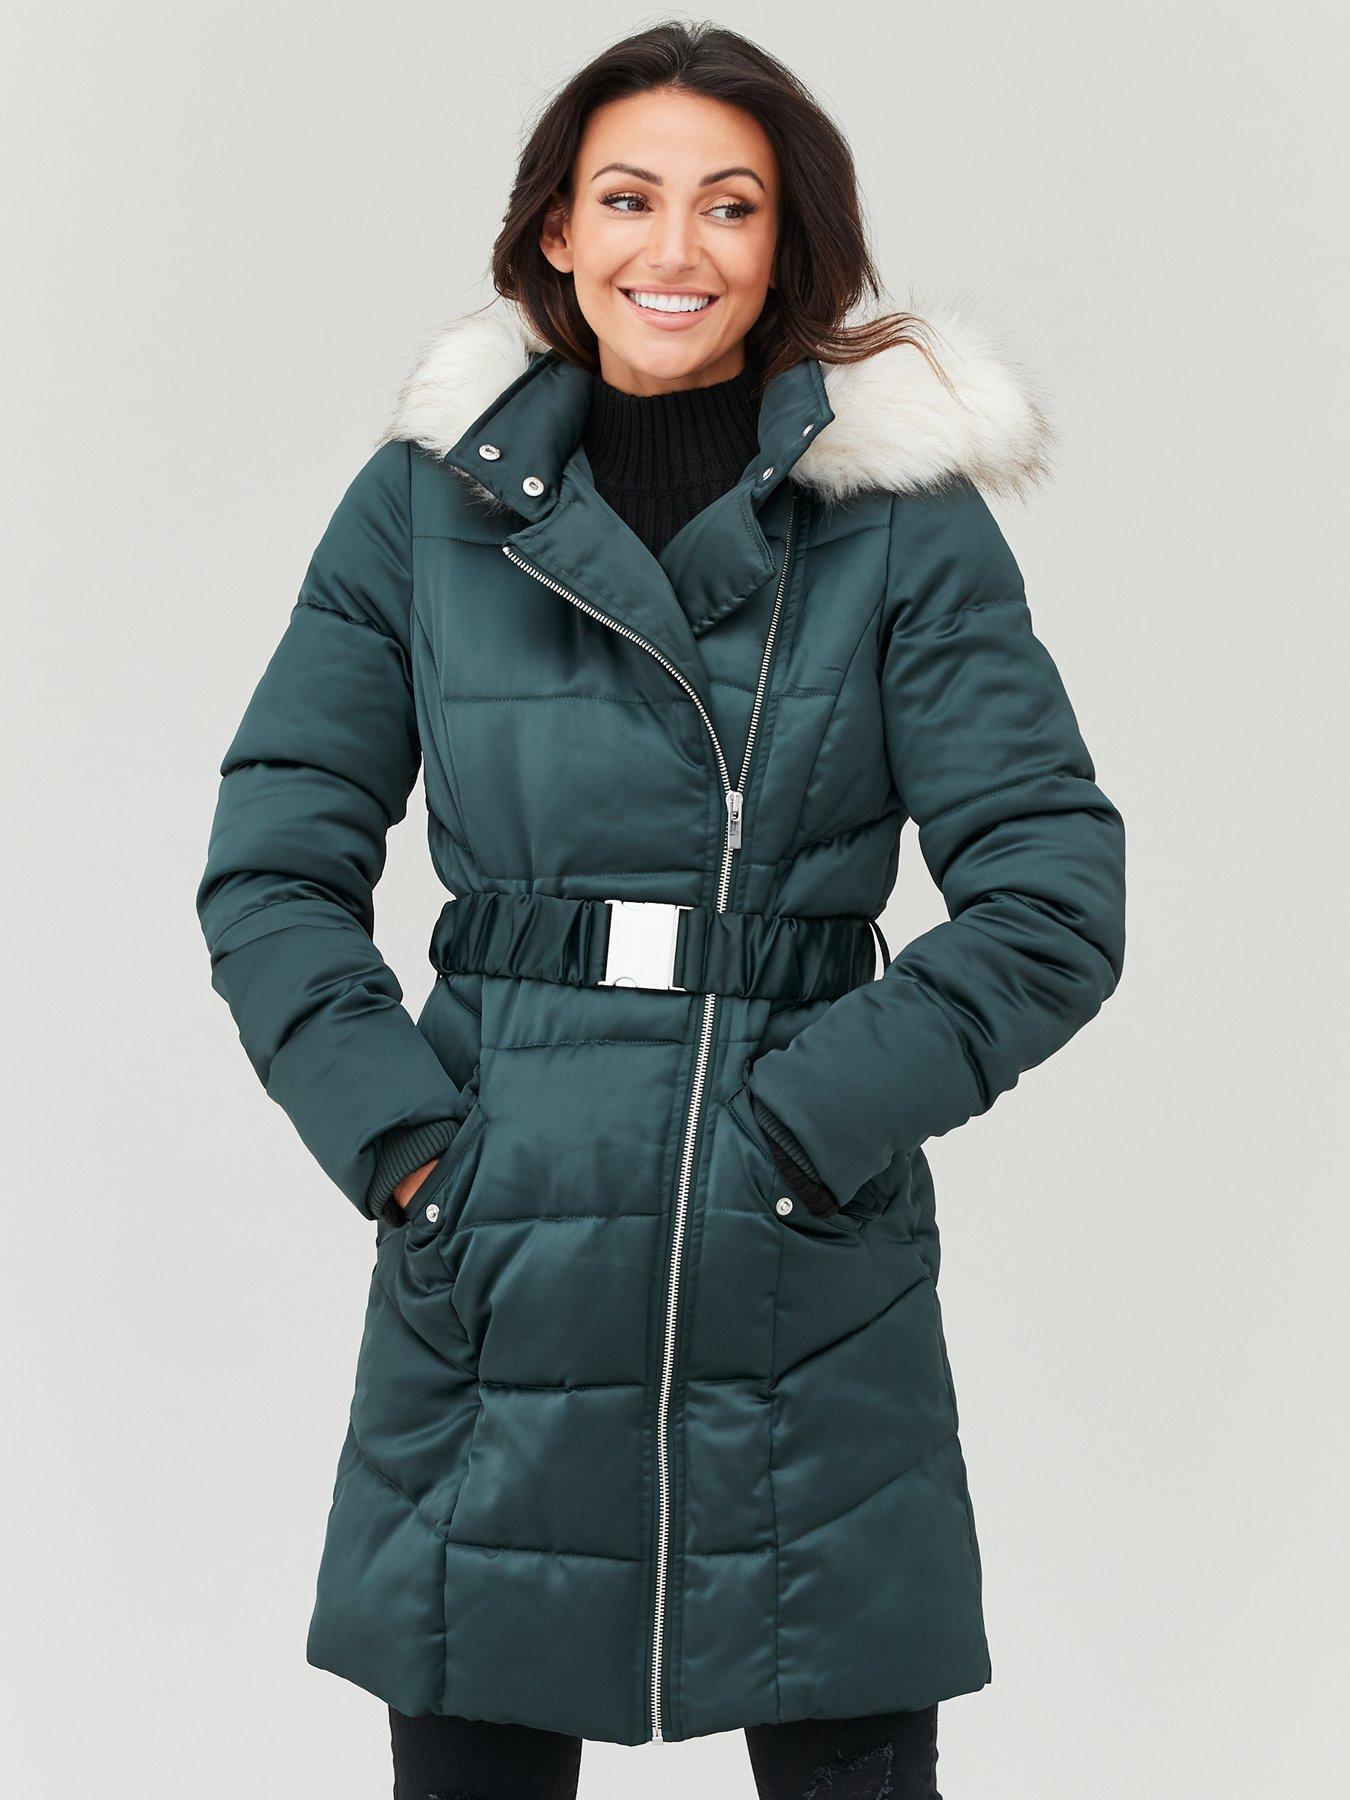 Michelle Keegan Premium Longline Padded Coat - Forest Green | very.co.uk